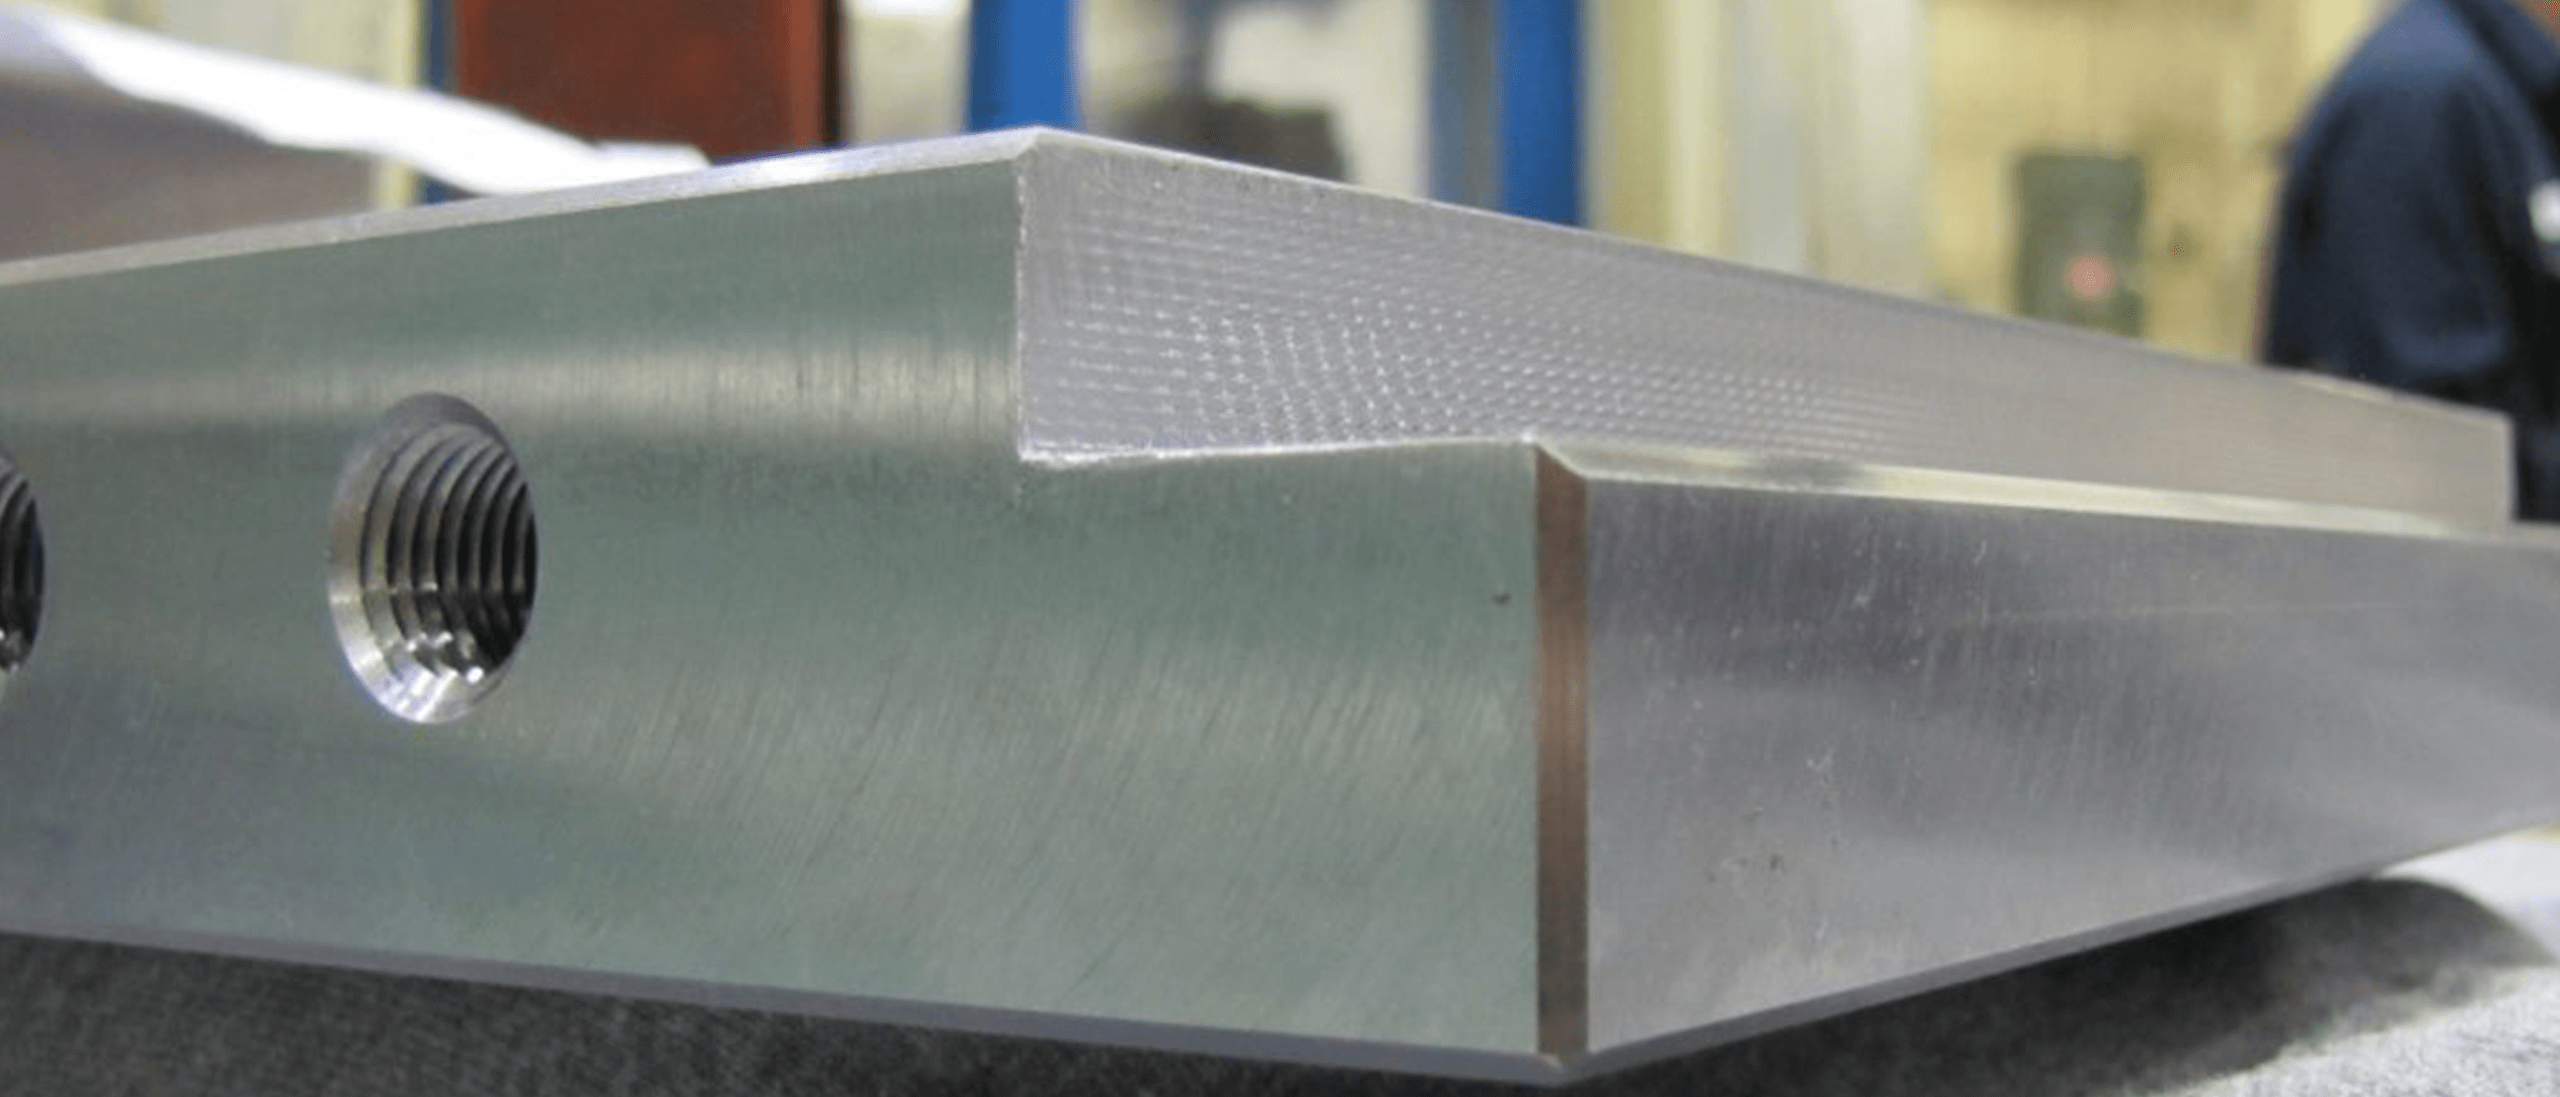 Machined steel plate, focused on chamfers on edges